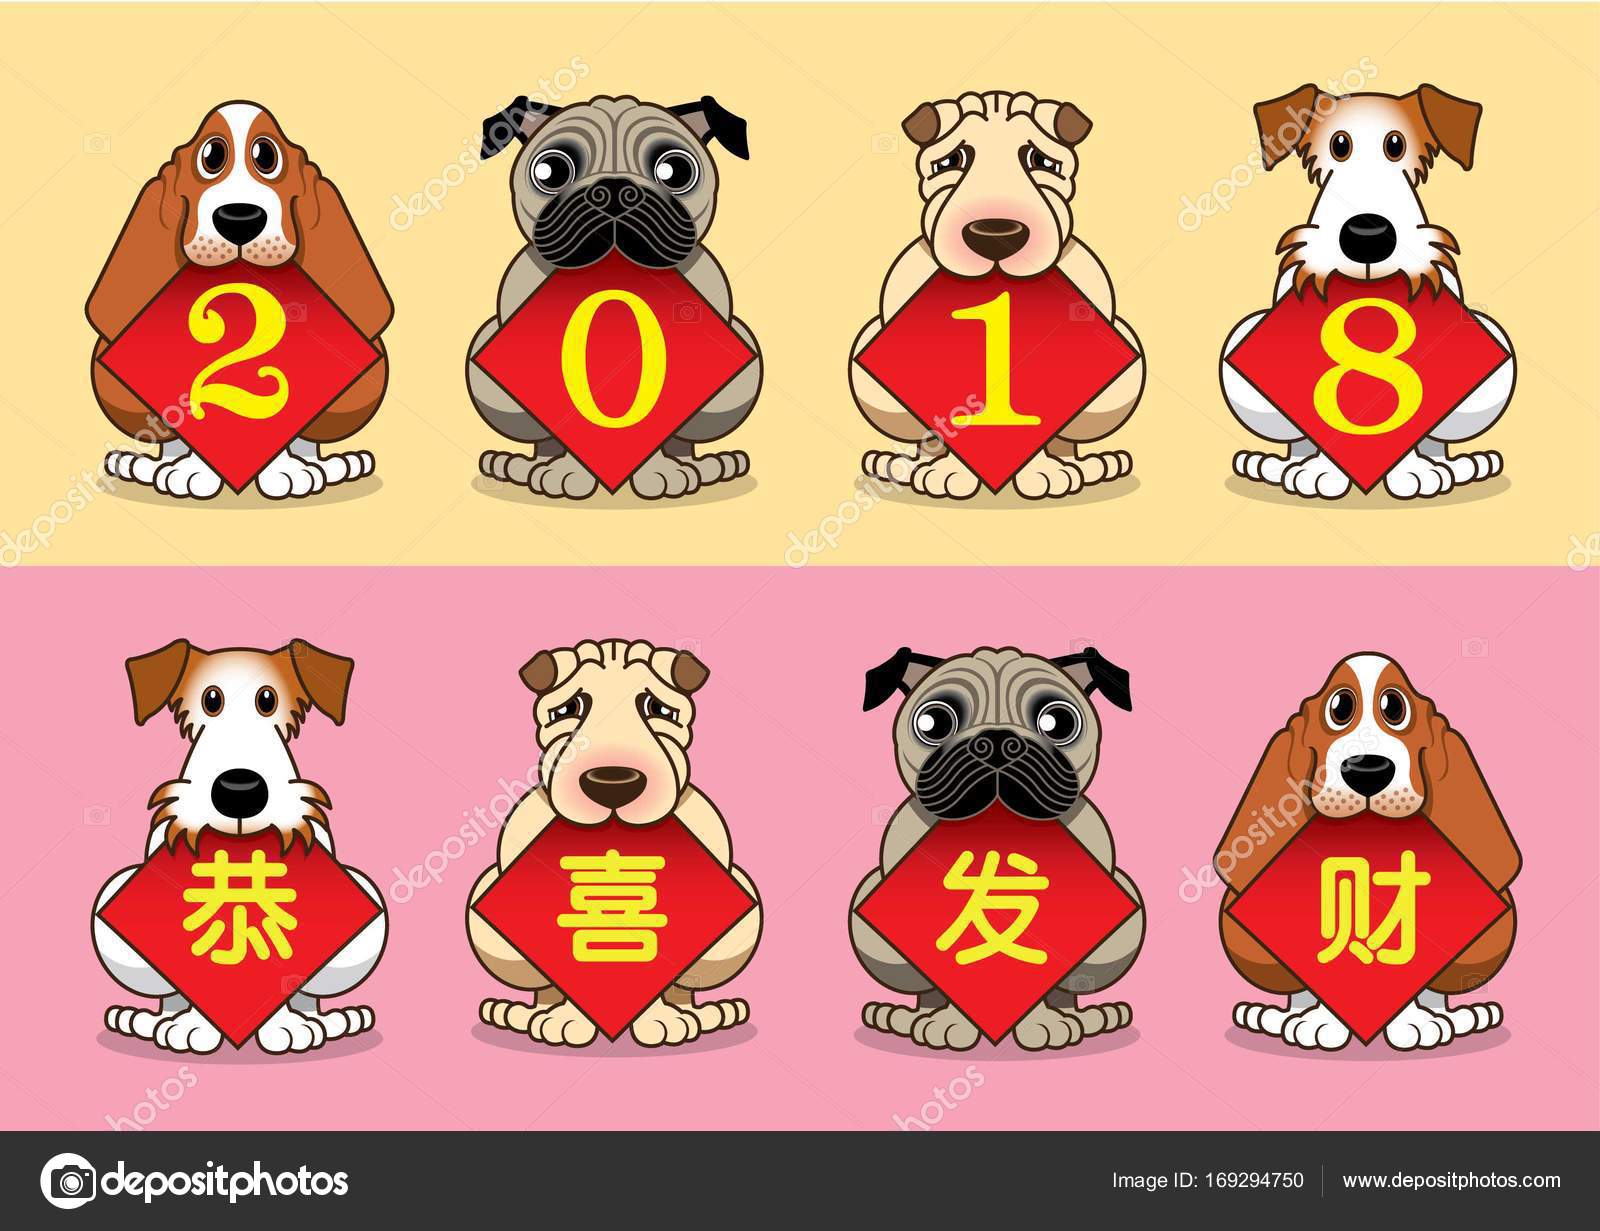 https://st3.depositphotos.com/14641558/16929/v/1600/depositphotos_169294750-stock-illustration-year-of-dog-2018.jpg